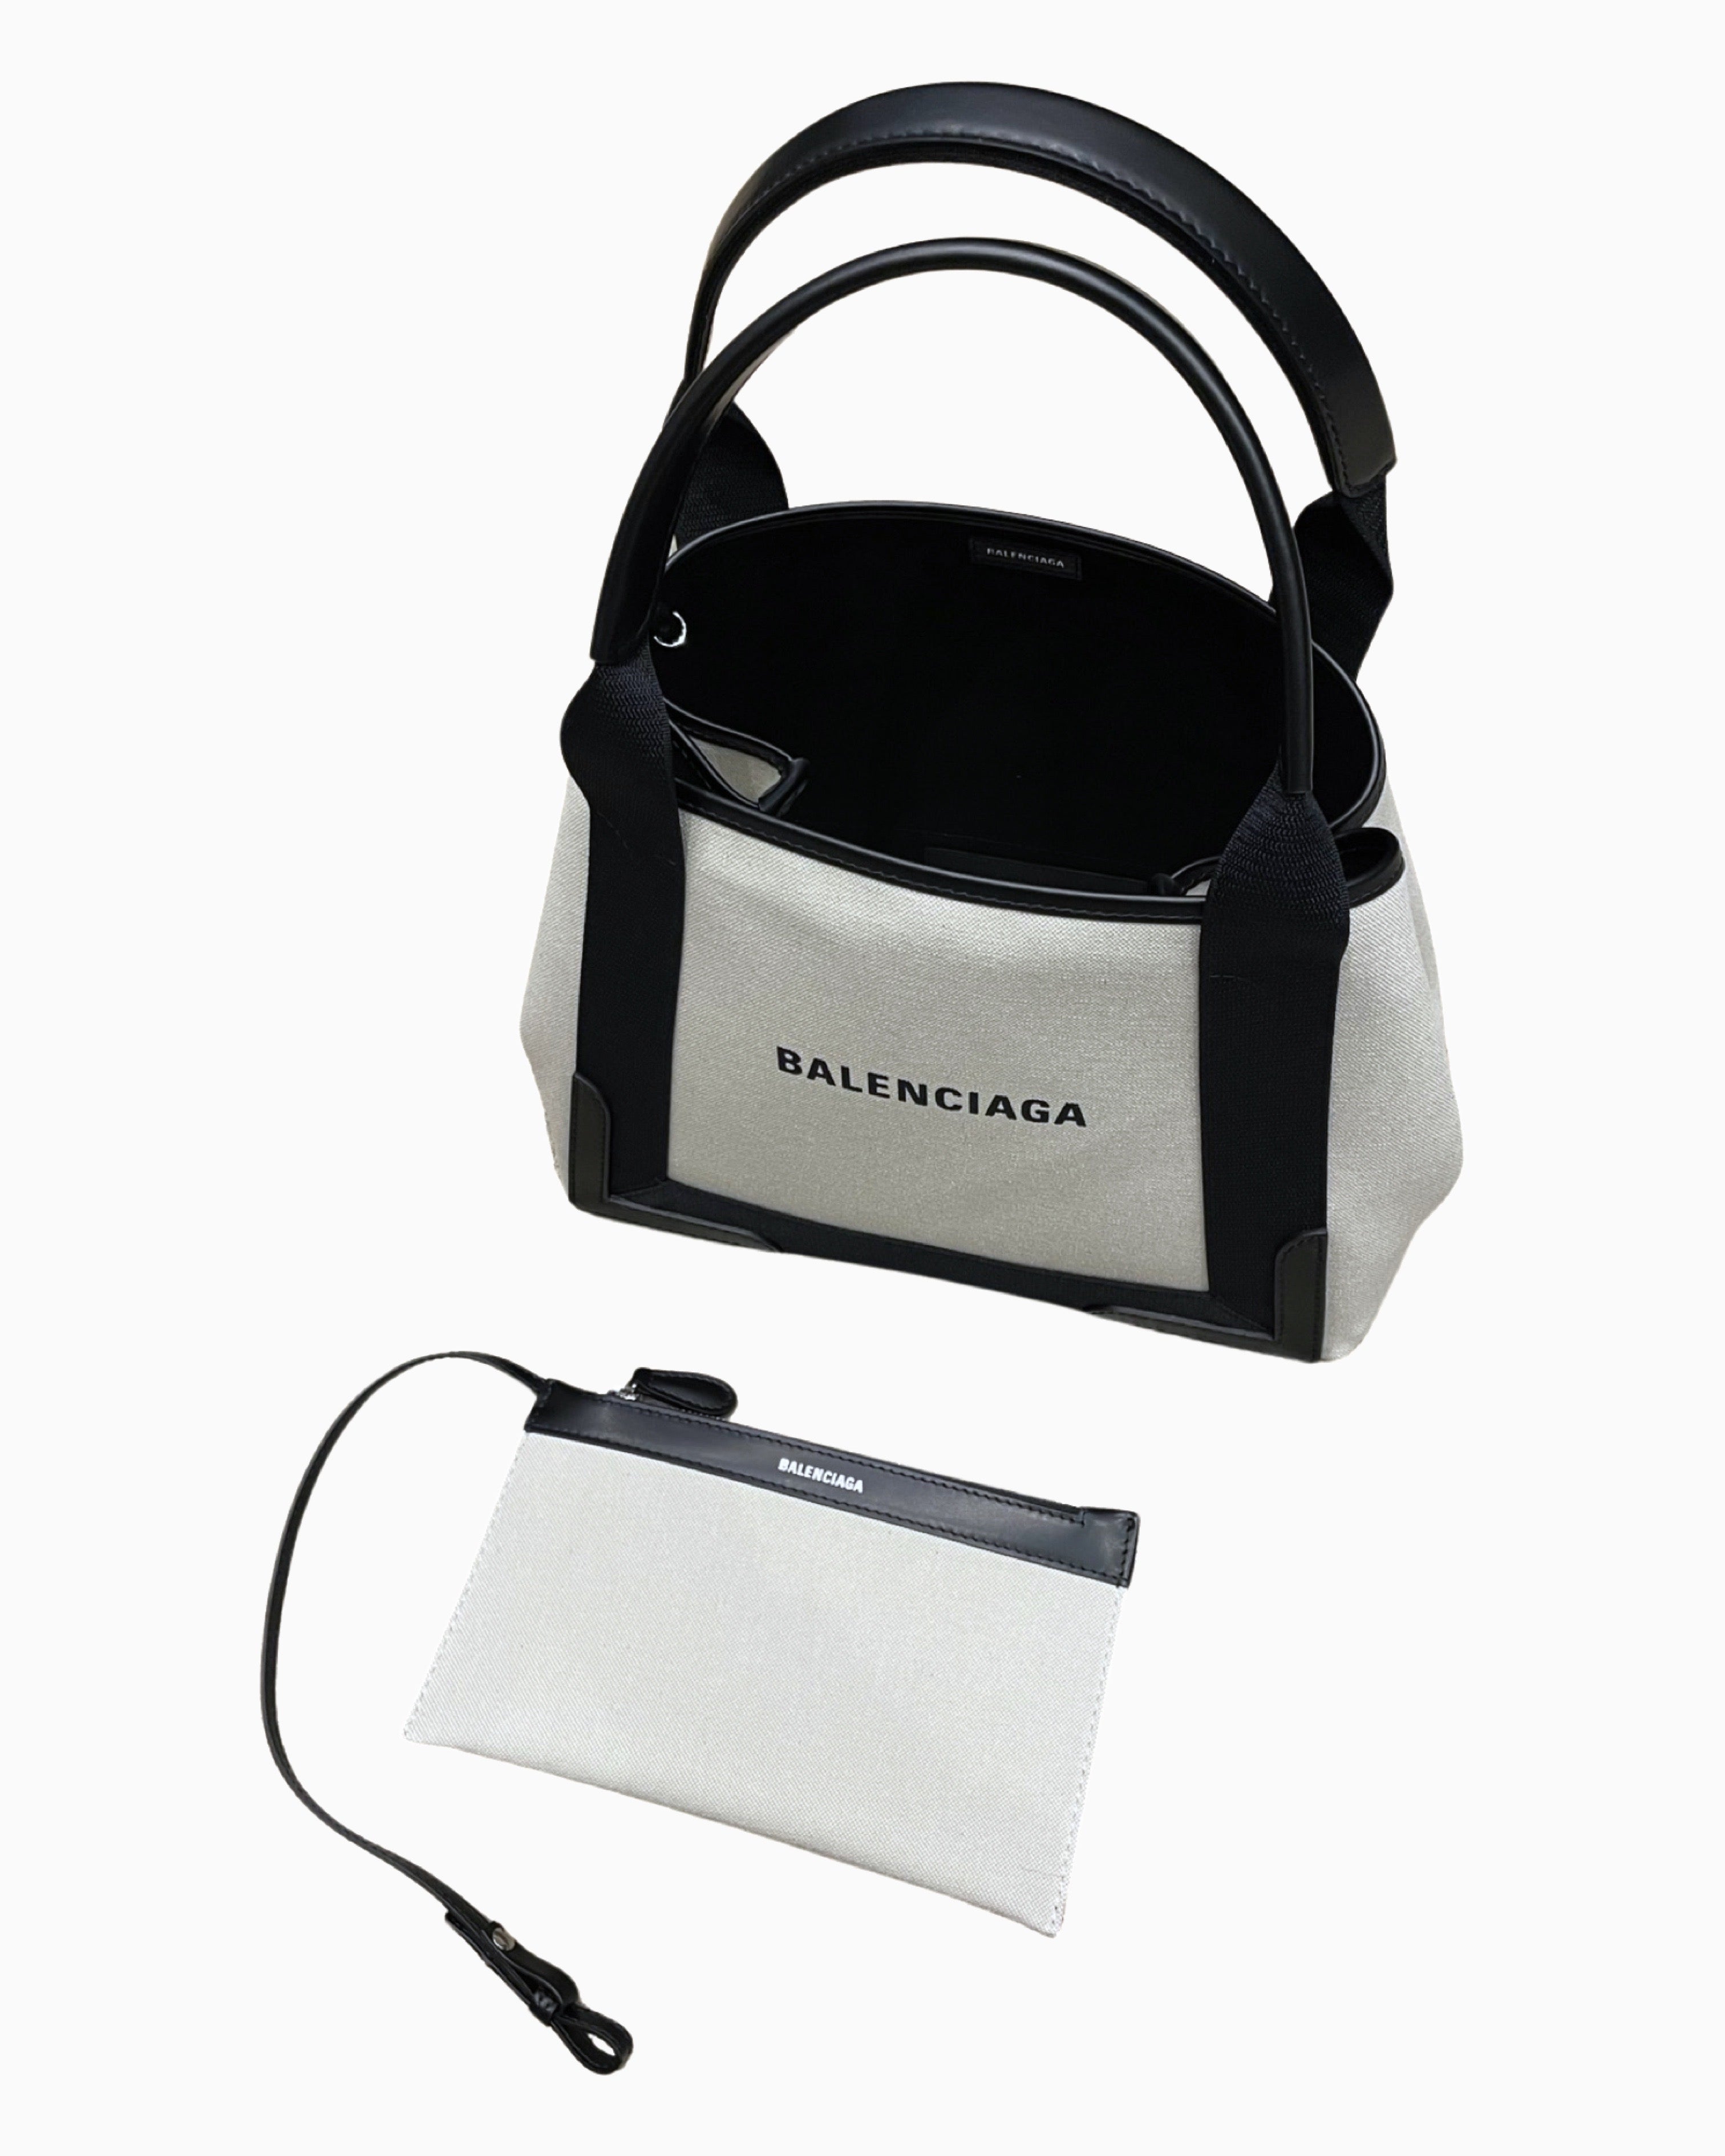 Mua Túi Xách Tay Balenciaga Hourglass XS Top Handle Bag Màu Đen  Balenciaga   Mua tại Vua Hàng Hiệu h022056